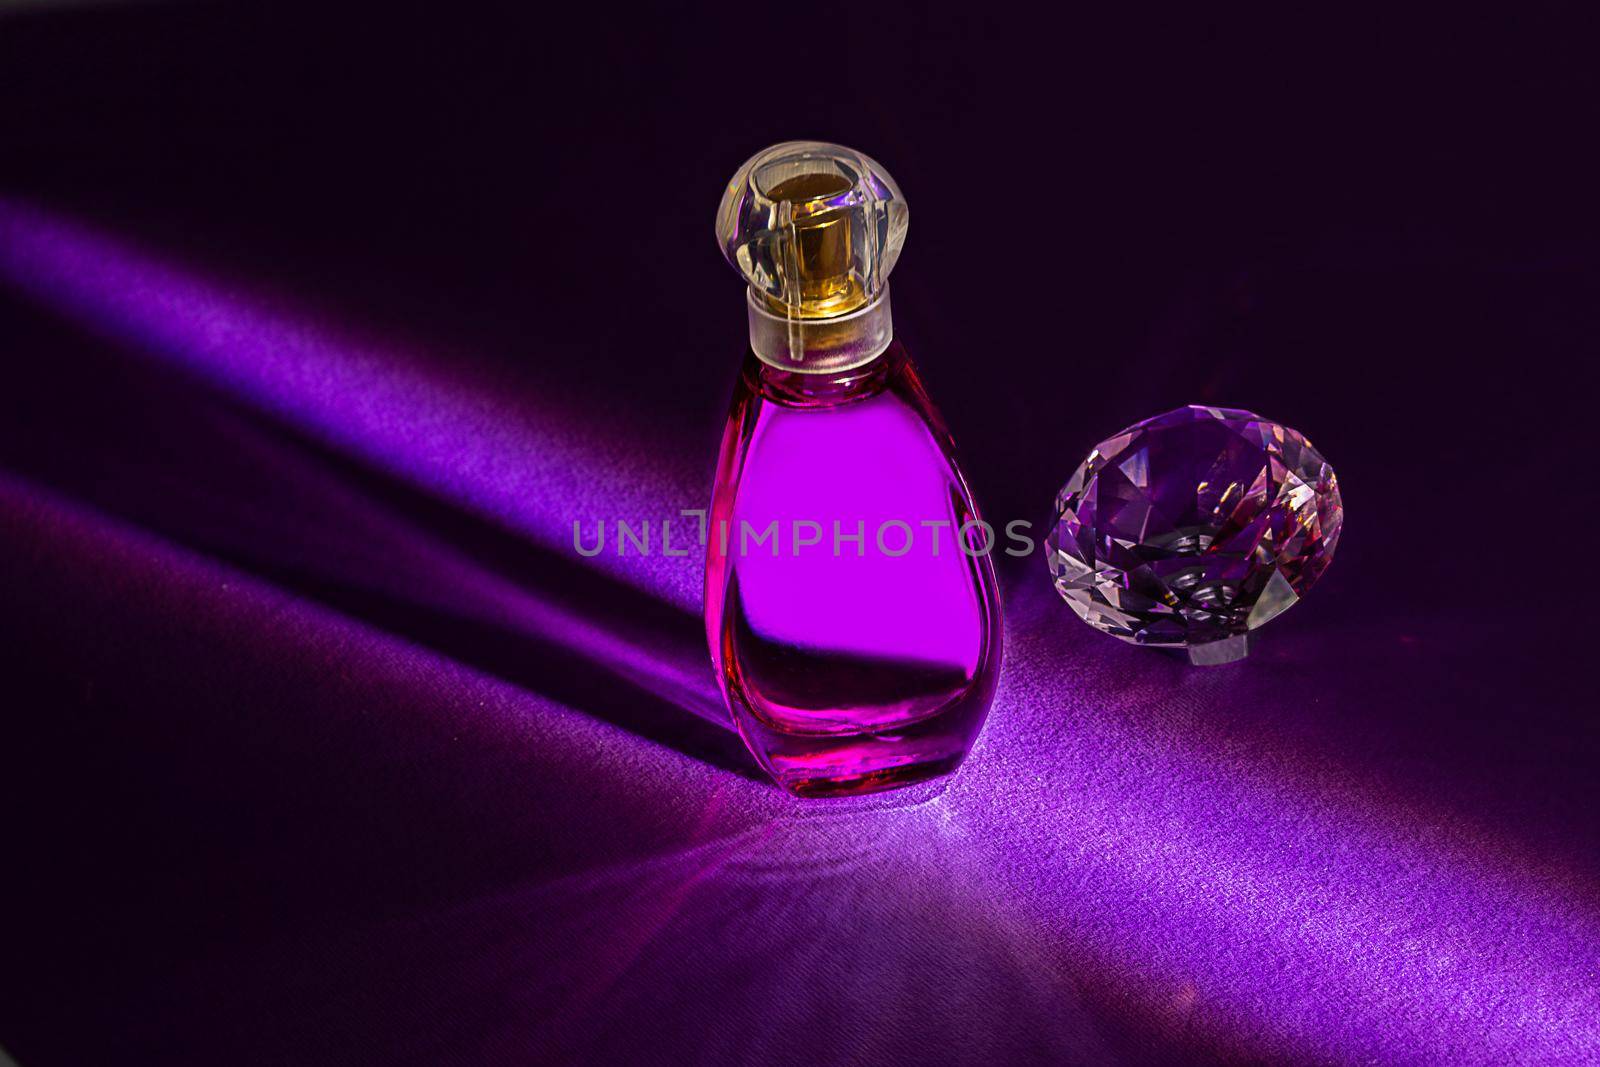 Perfume bottles studio shot on colored background with reflection by galinasharapova